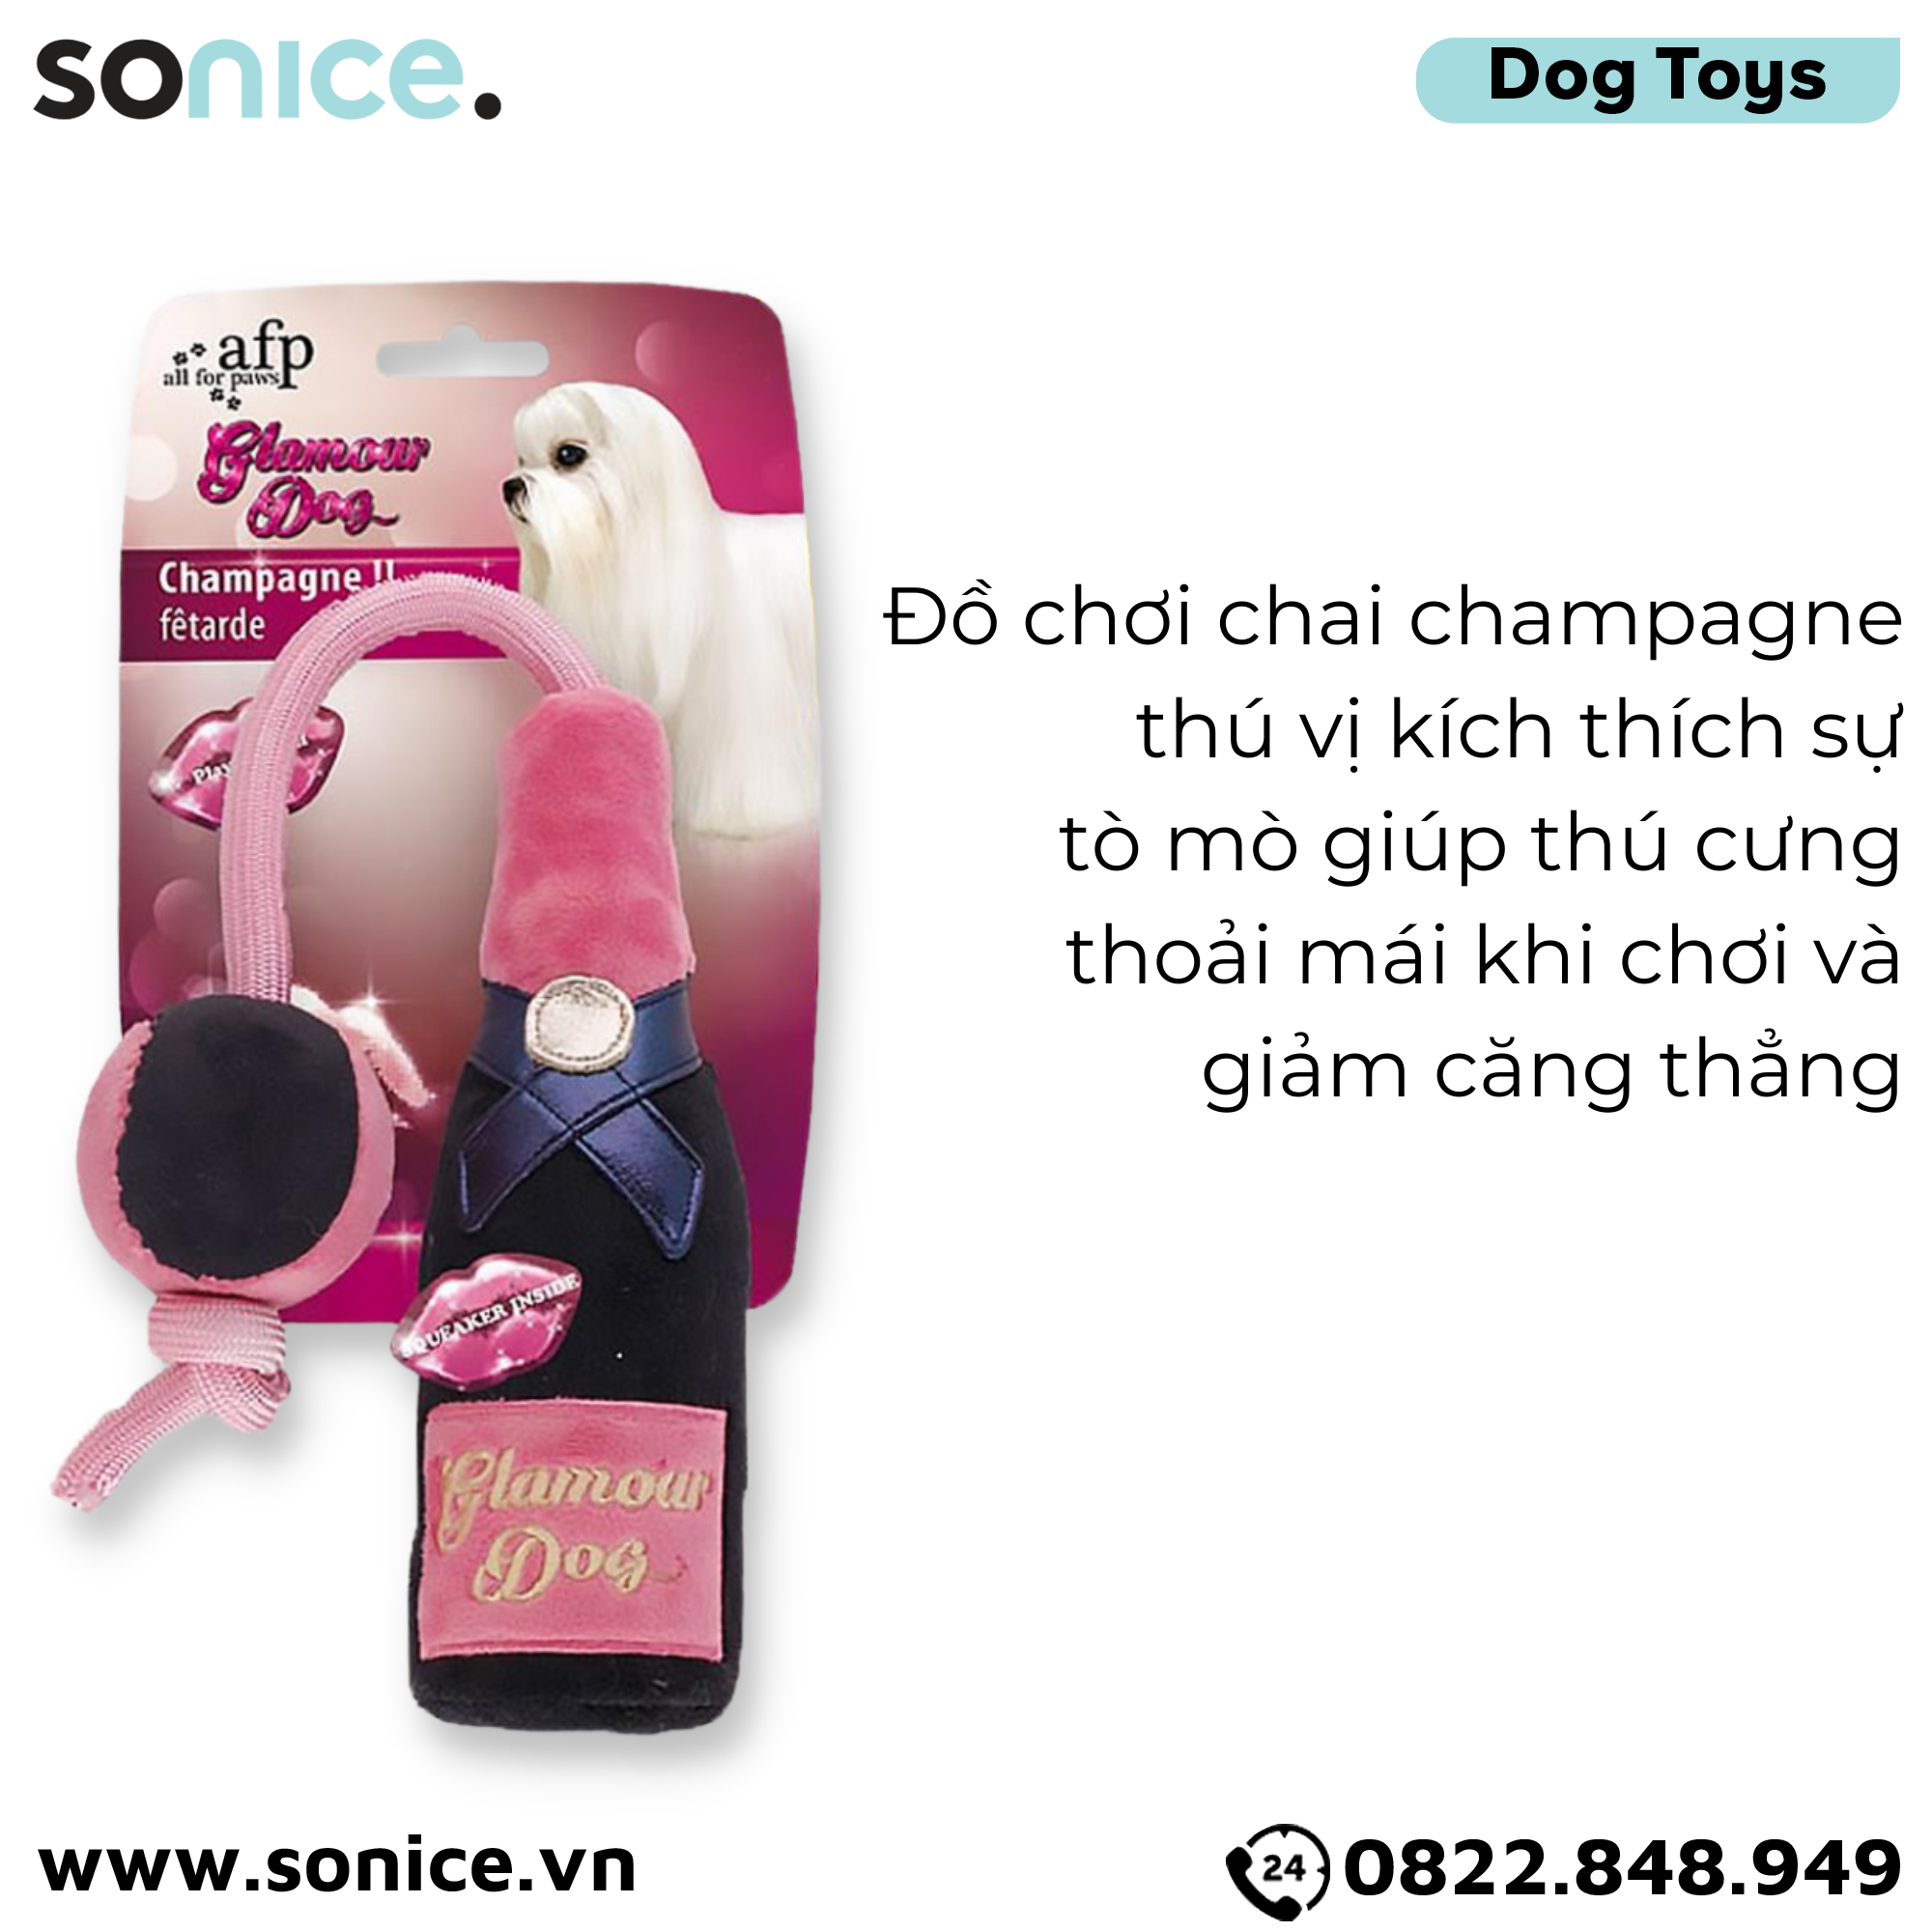  Đồ chơi AFP Glamour Dog Toys - Chai Champagne SONICE. 